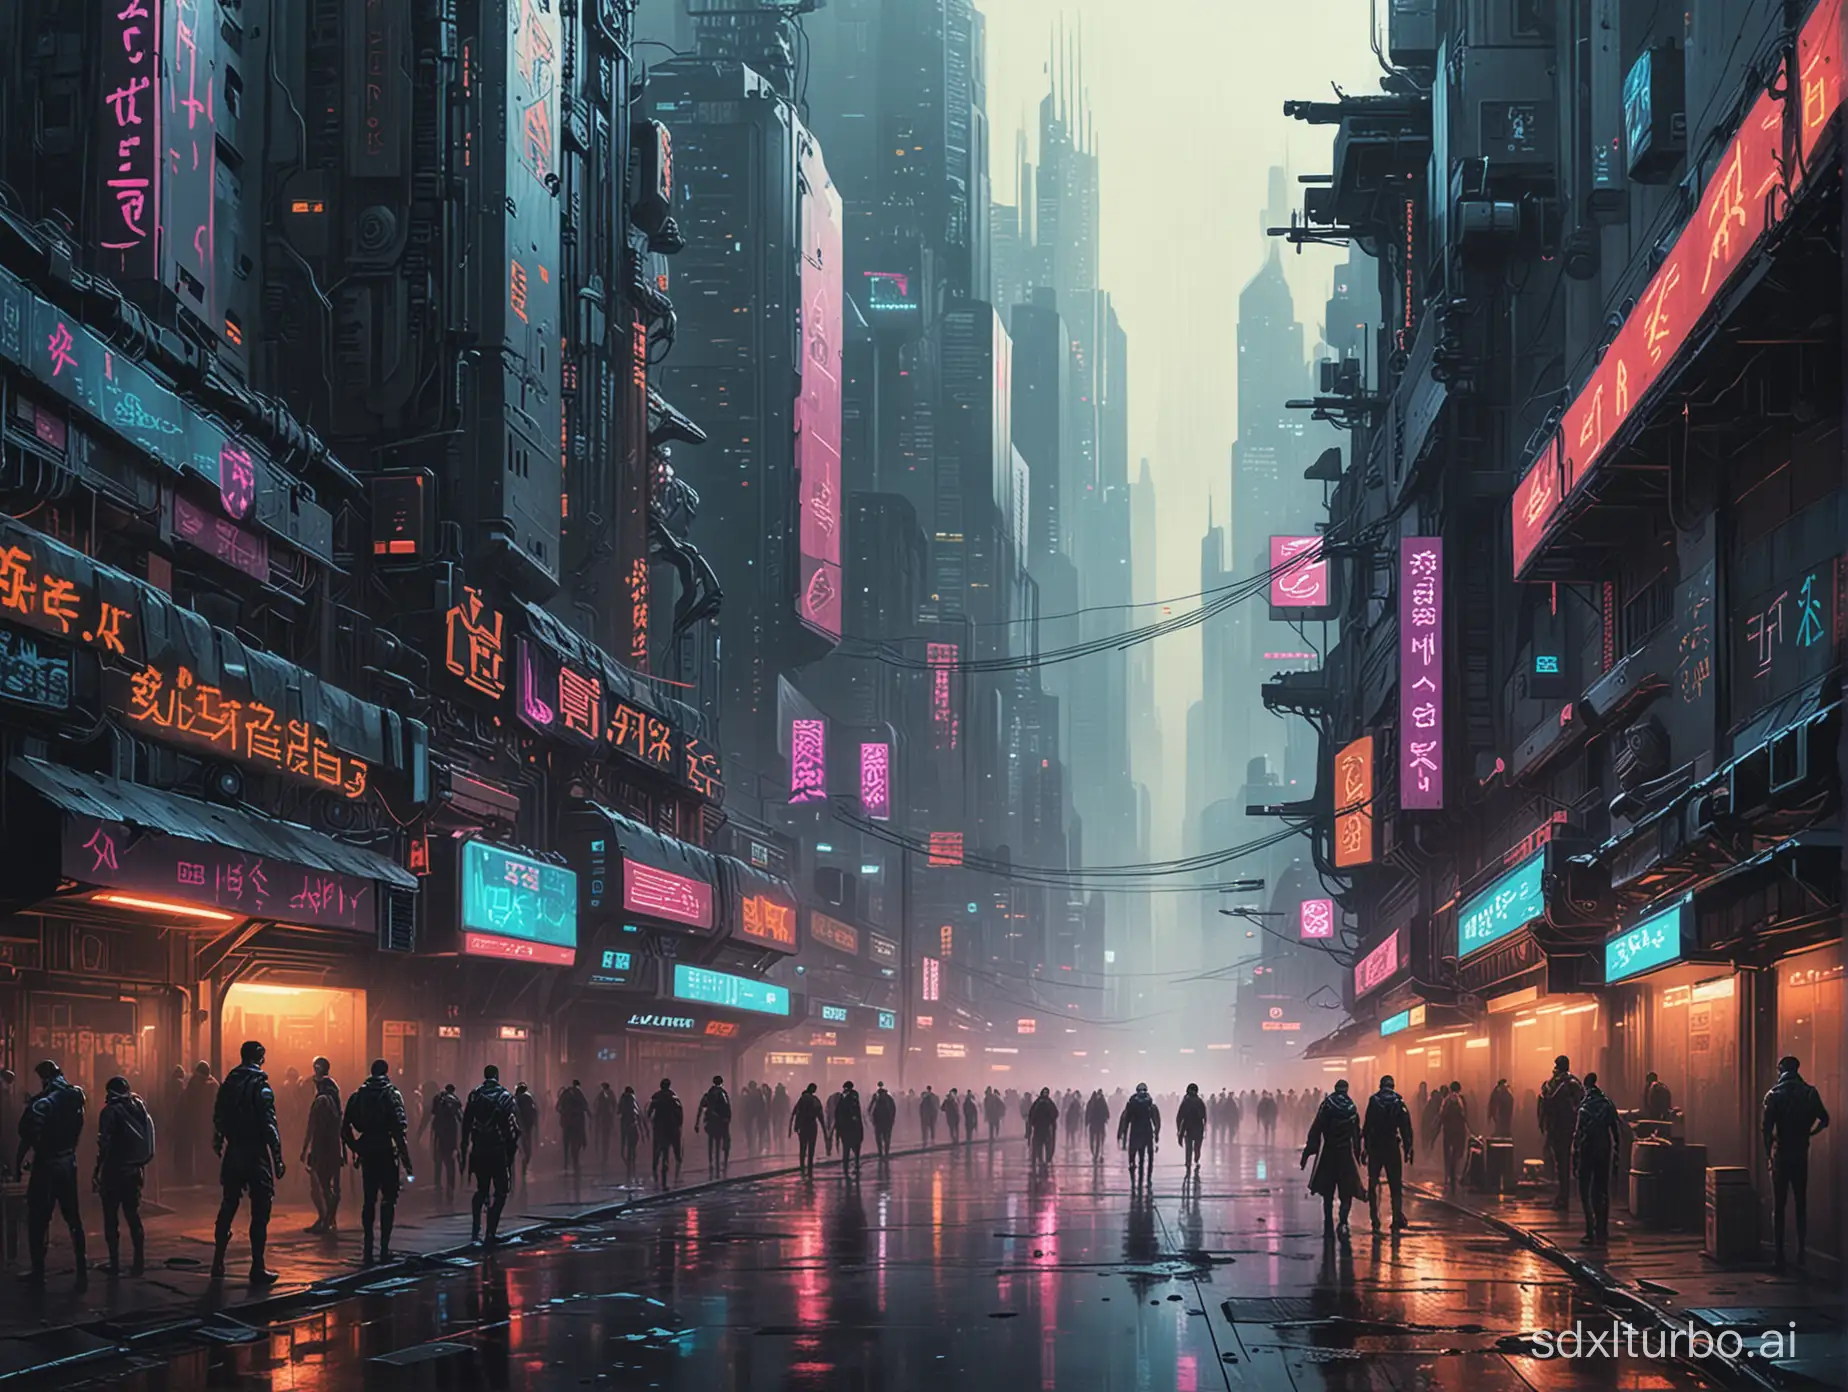 Futuristic-Cyberpunk-Cityscape-Artwork-Neonlit-Urban-Landscape-with-Technological-Elements